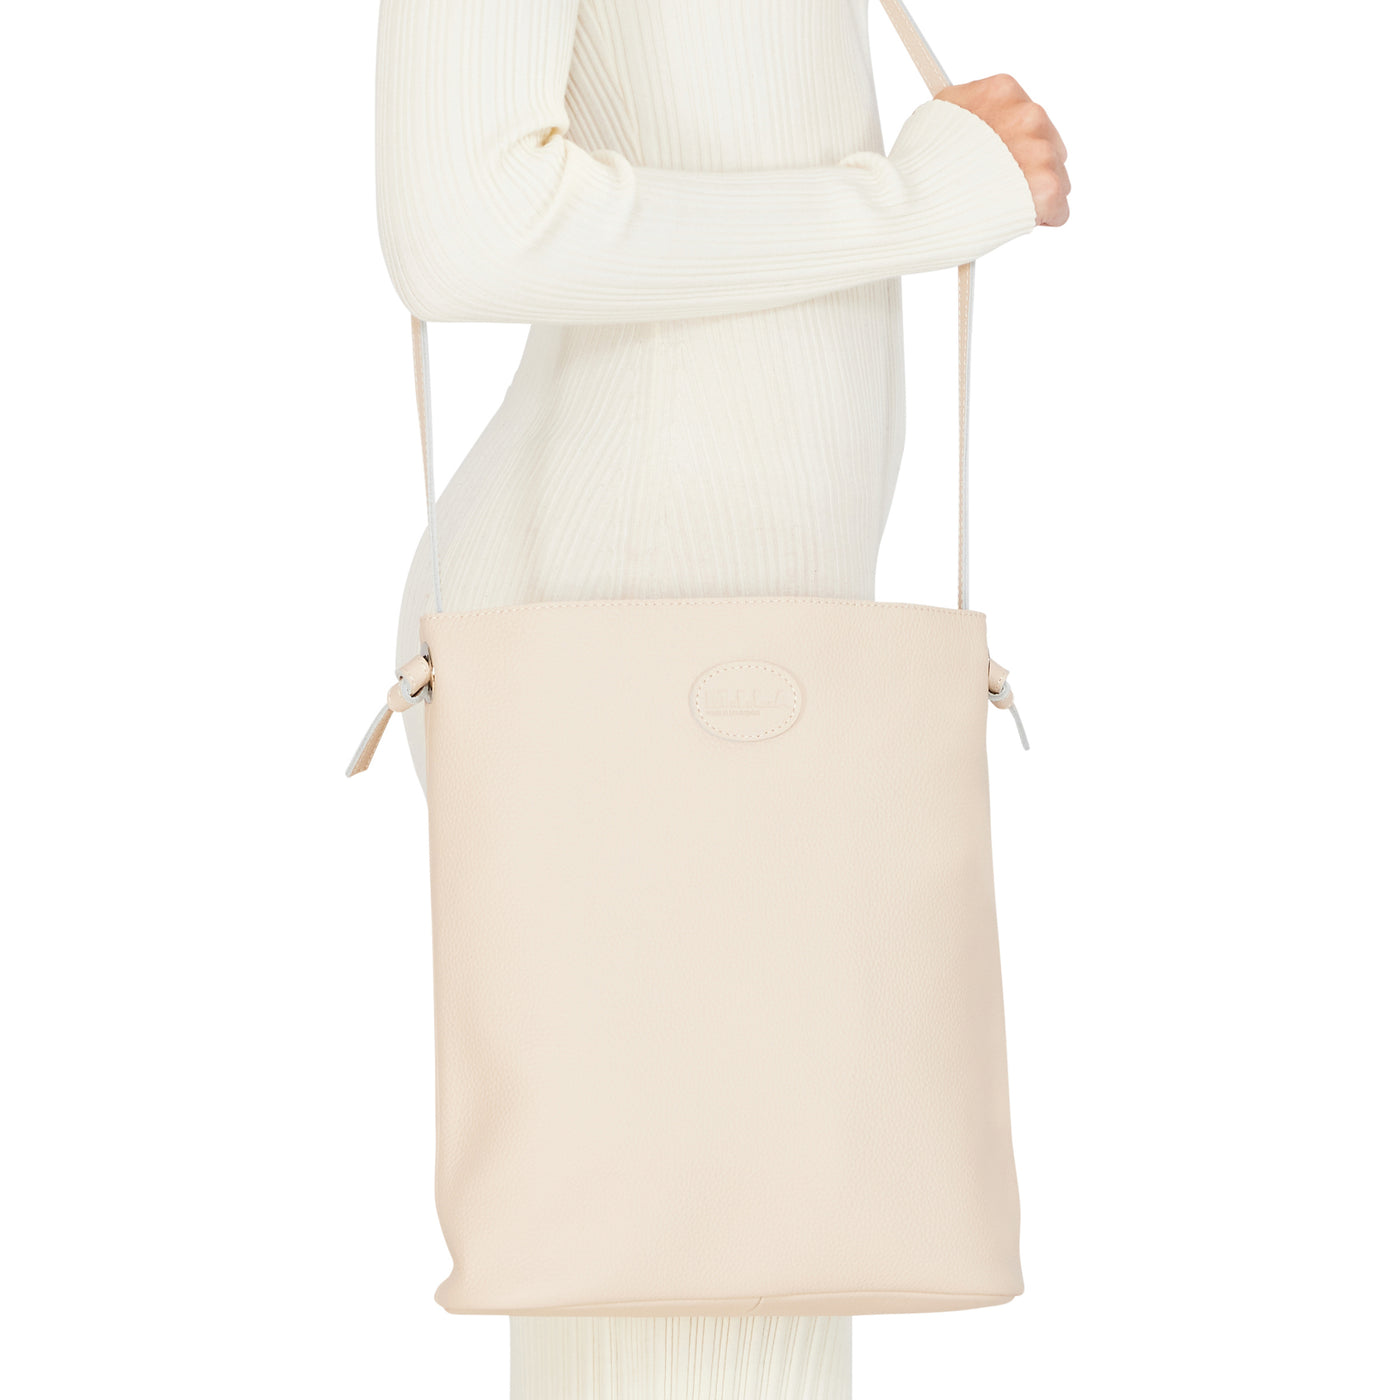 Mila Louise Obaya Tr Women's Cross-Body Bag, Yellow (Honey), 11x21x20  centimeters (W x H x L): Handbags